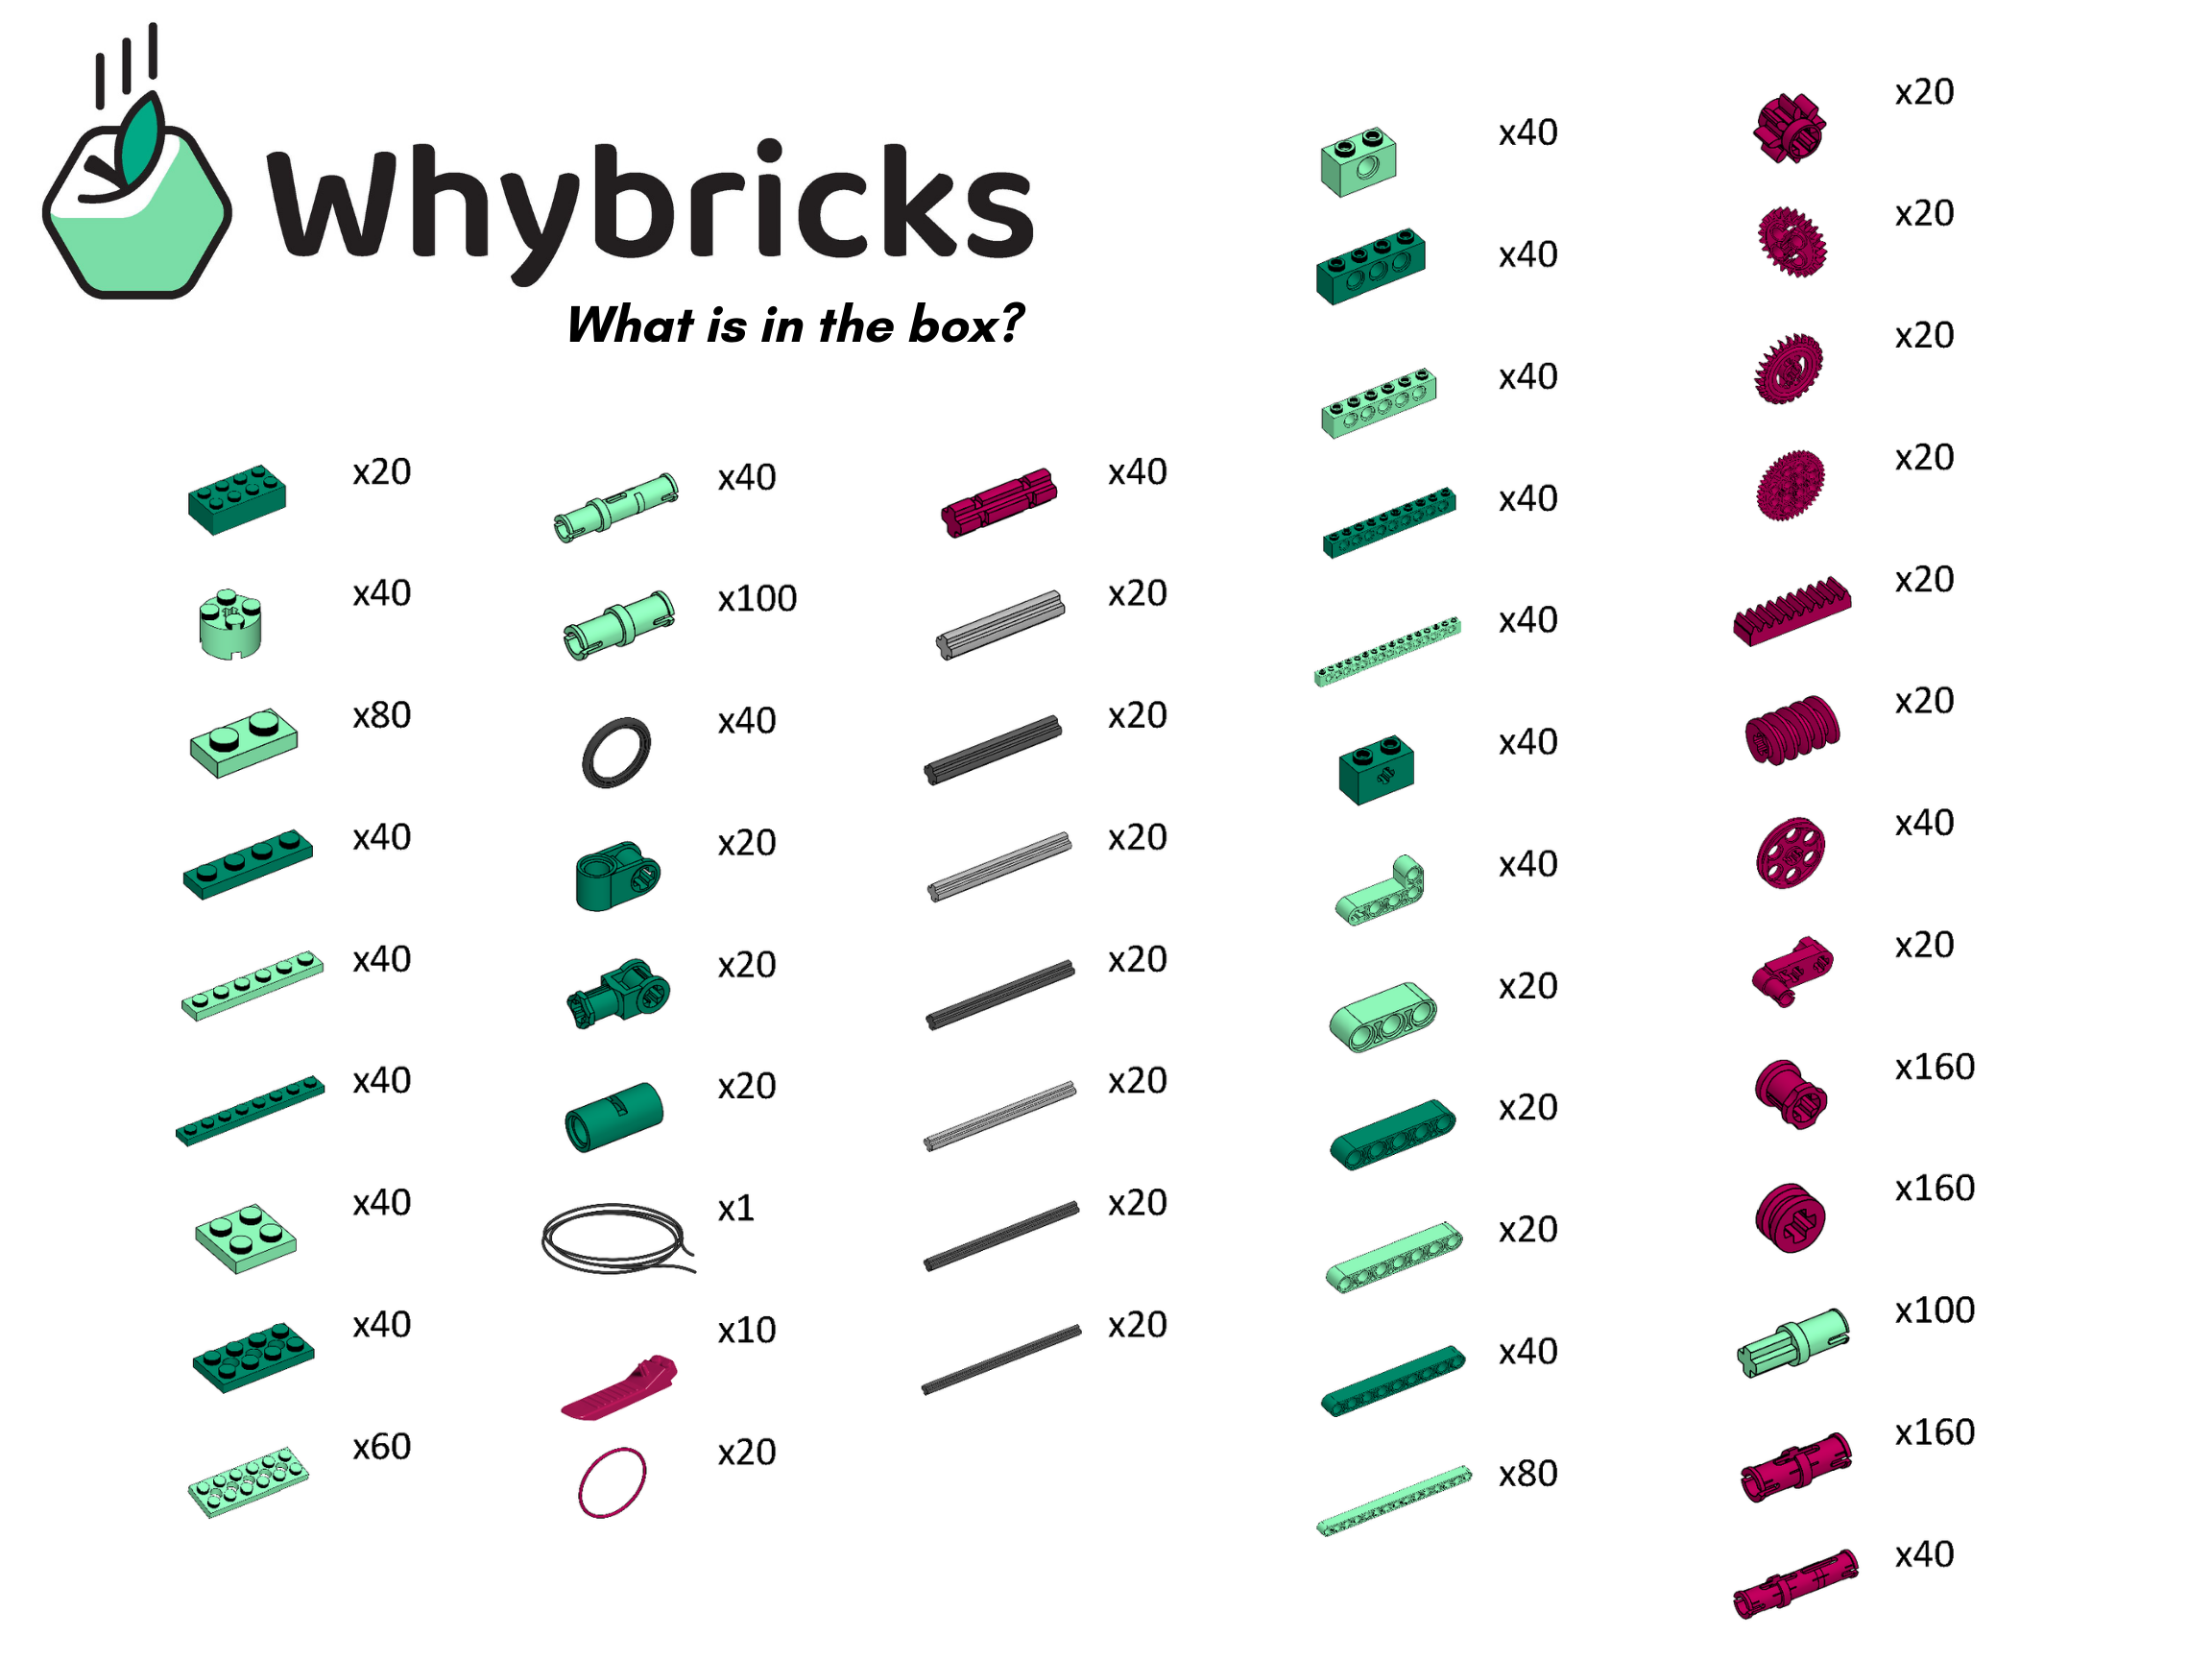 Whybricks-box-contents